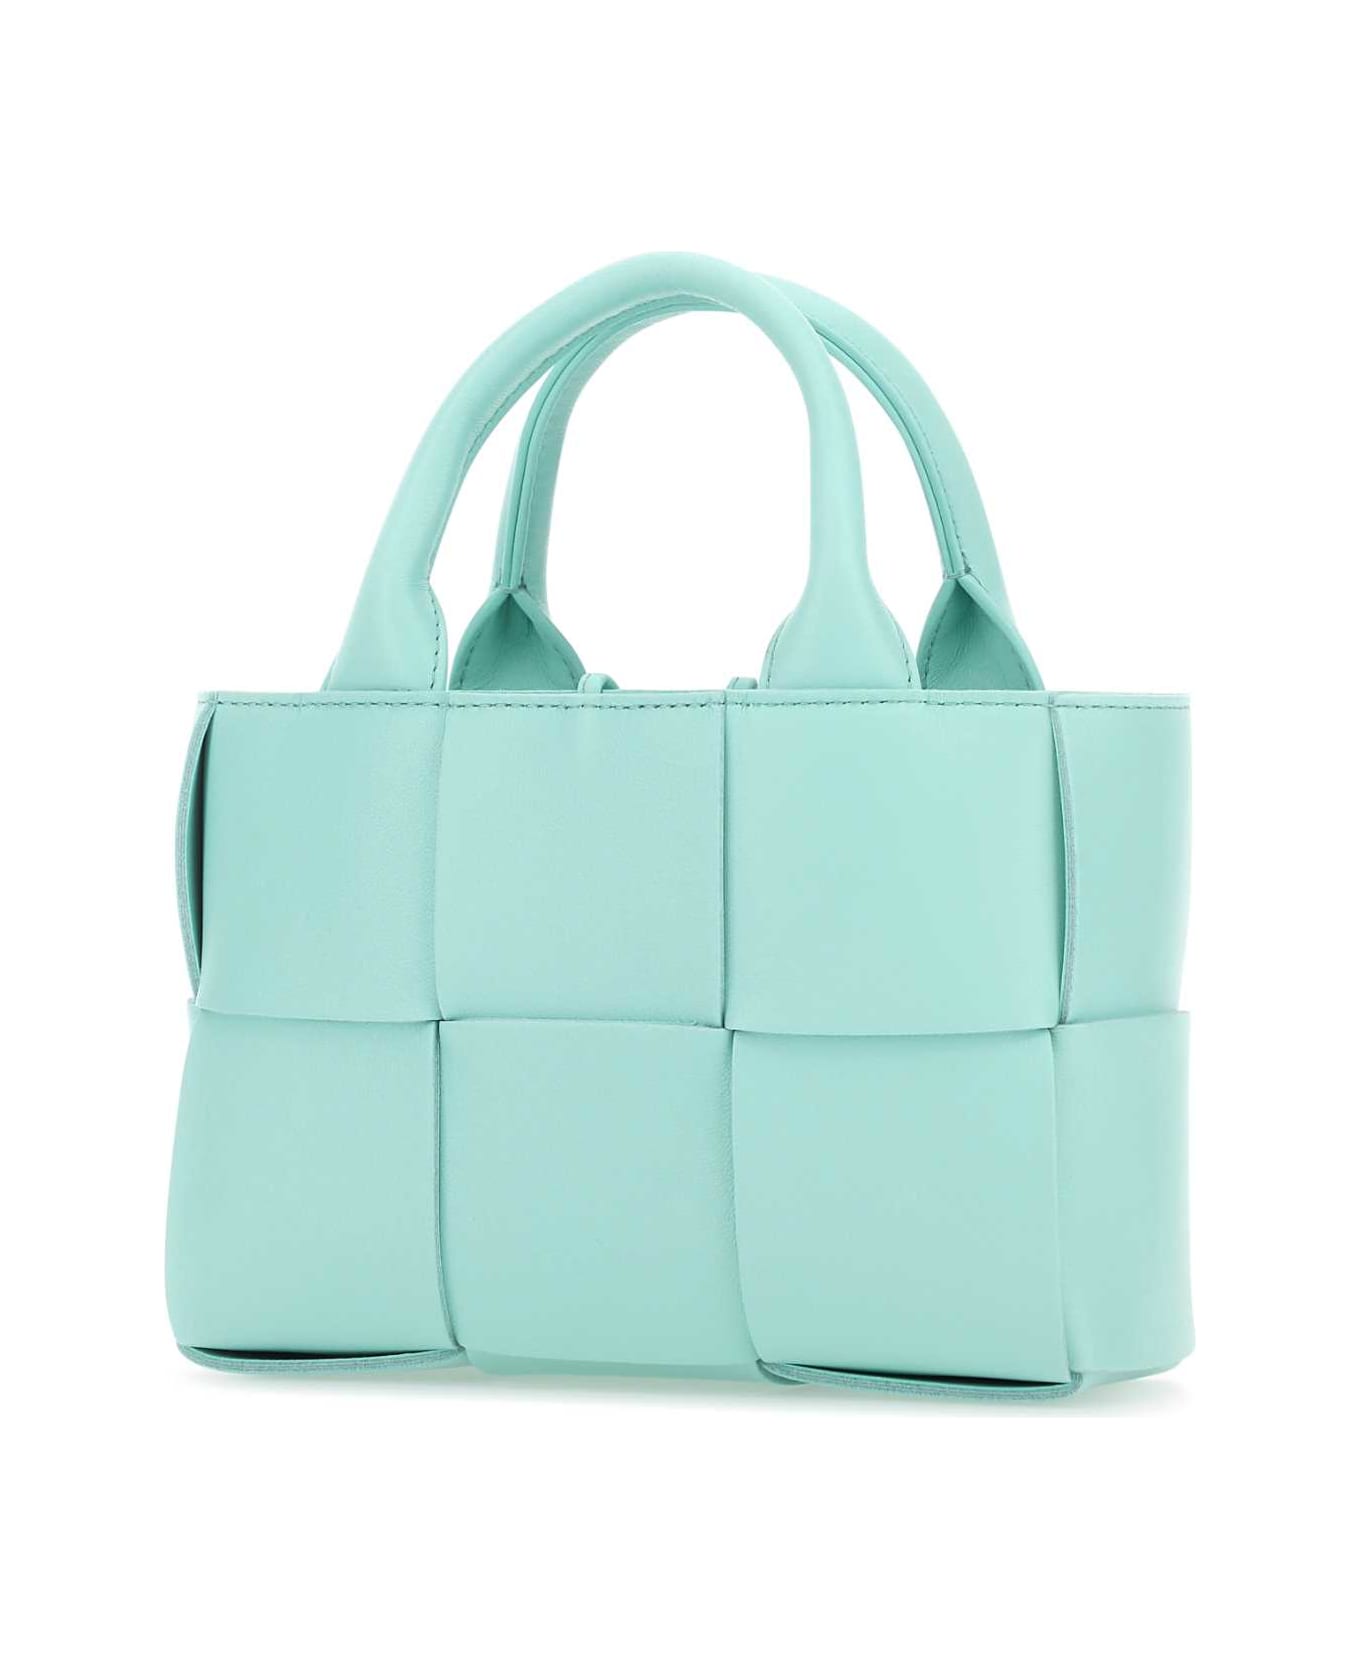 Bottega Veneta Light-blue Leather Candy Arco Handbag - PALEBLU